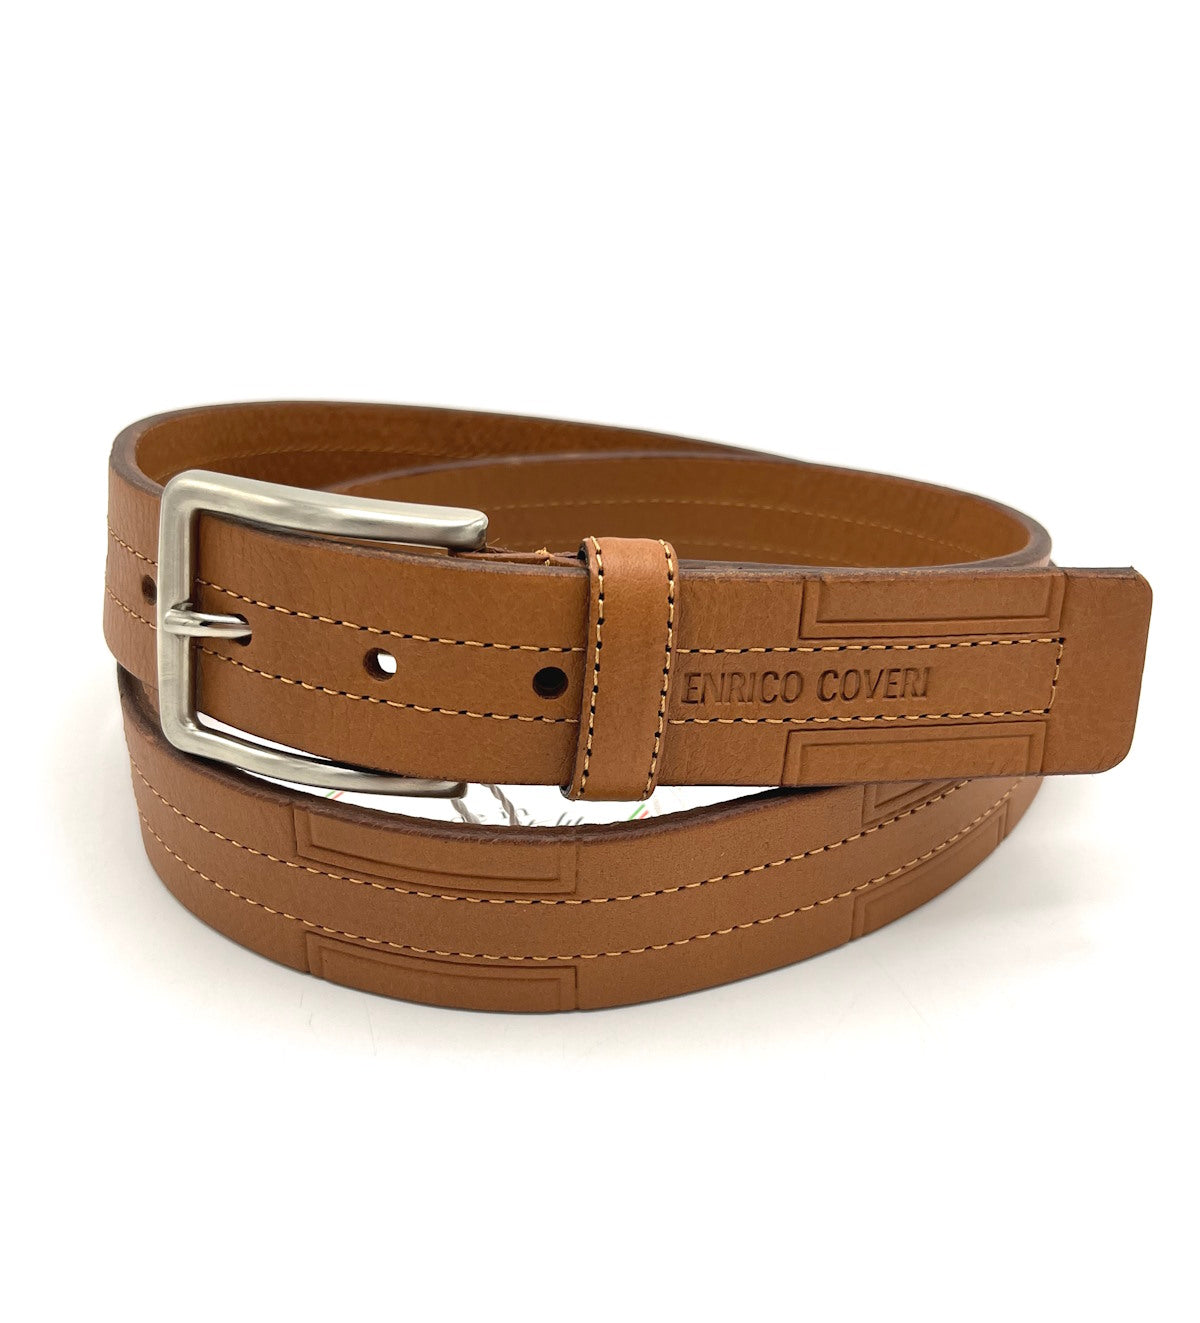 Genuine leather belt, Handmade in Italy, Brand Enrico Coveri, art. EC3501